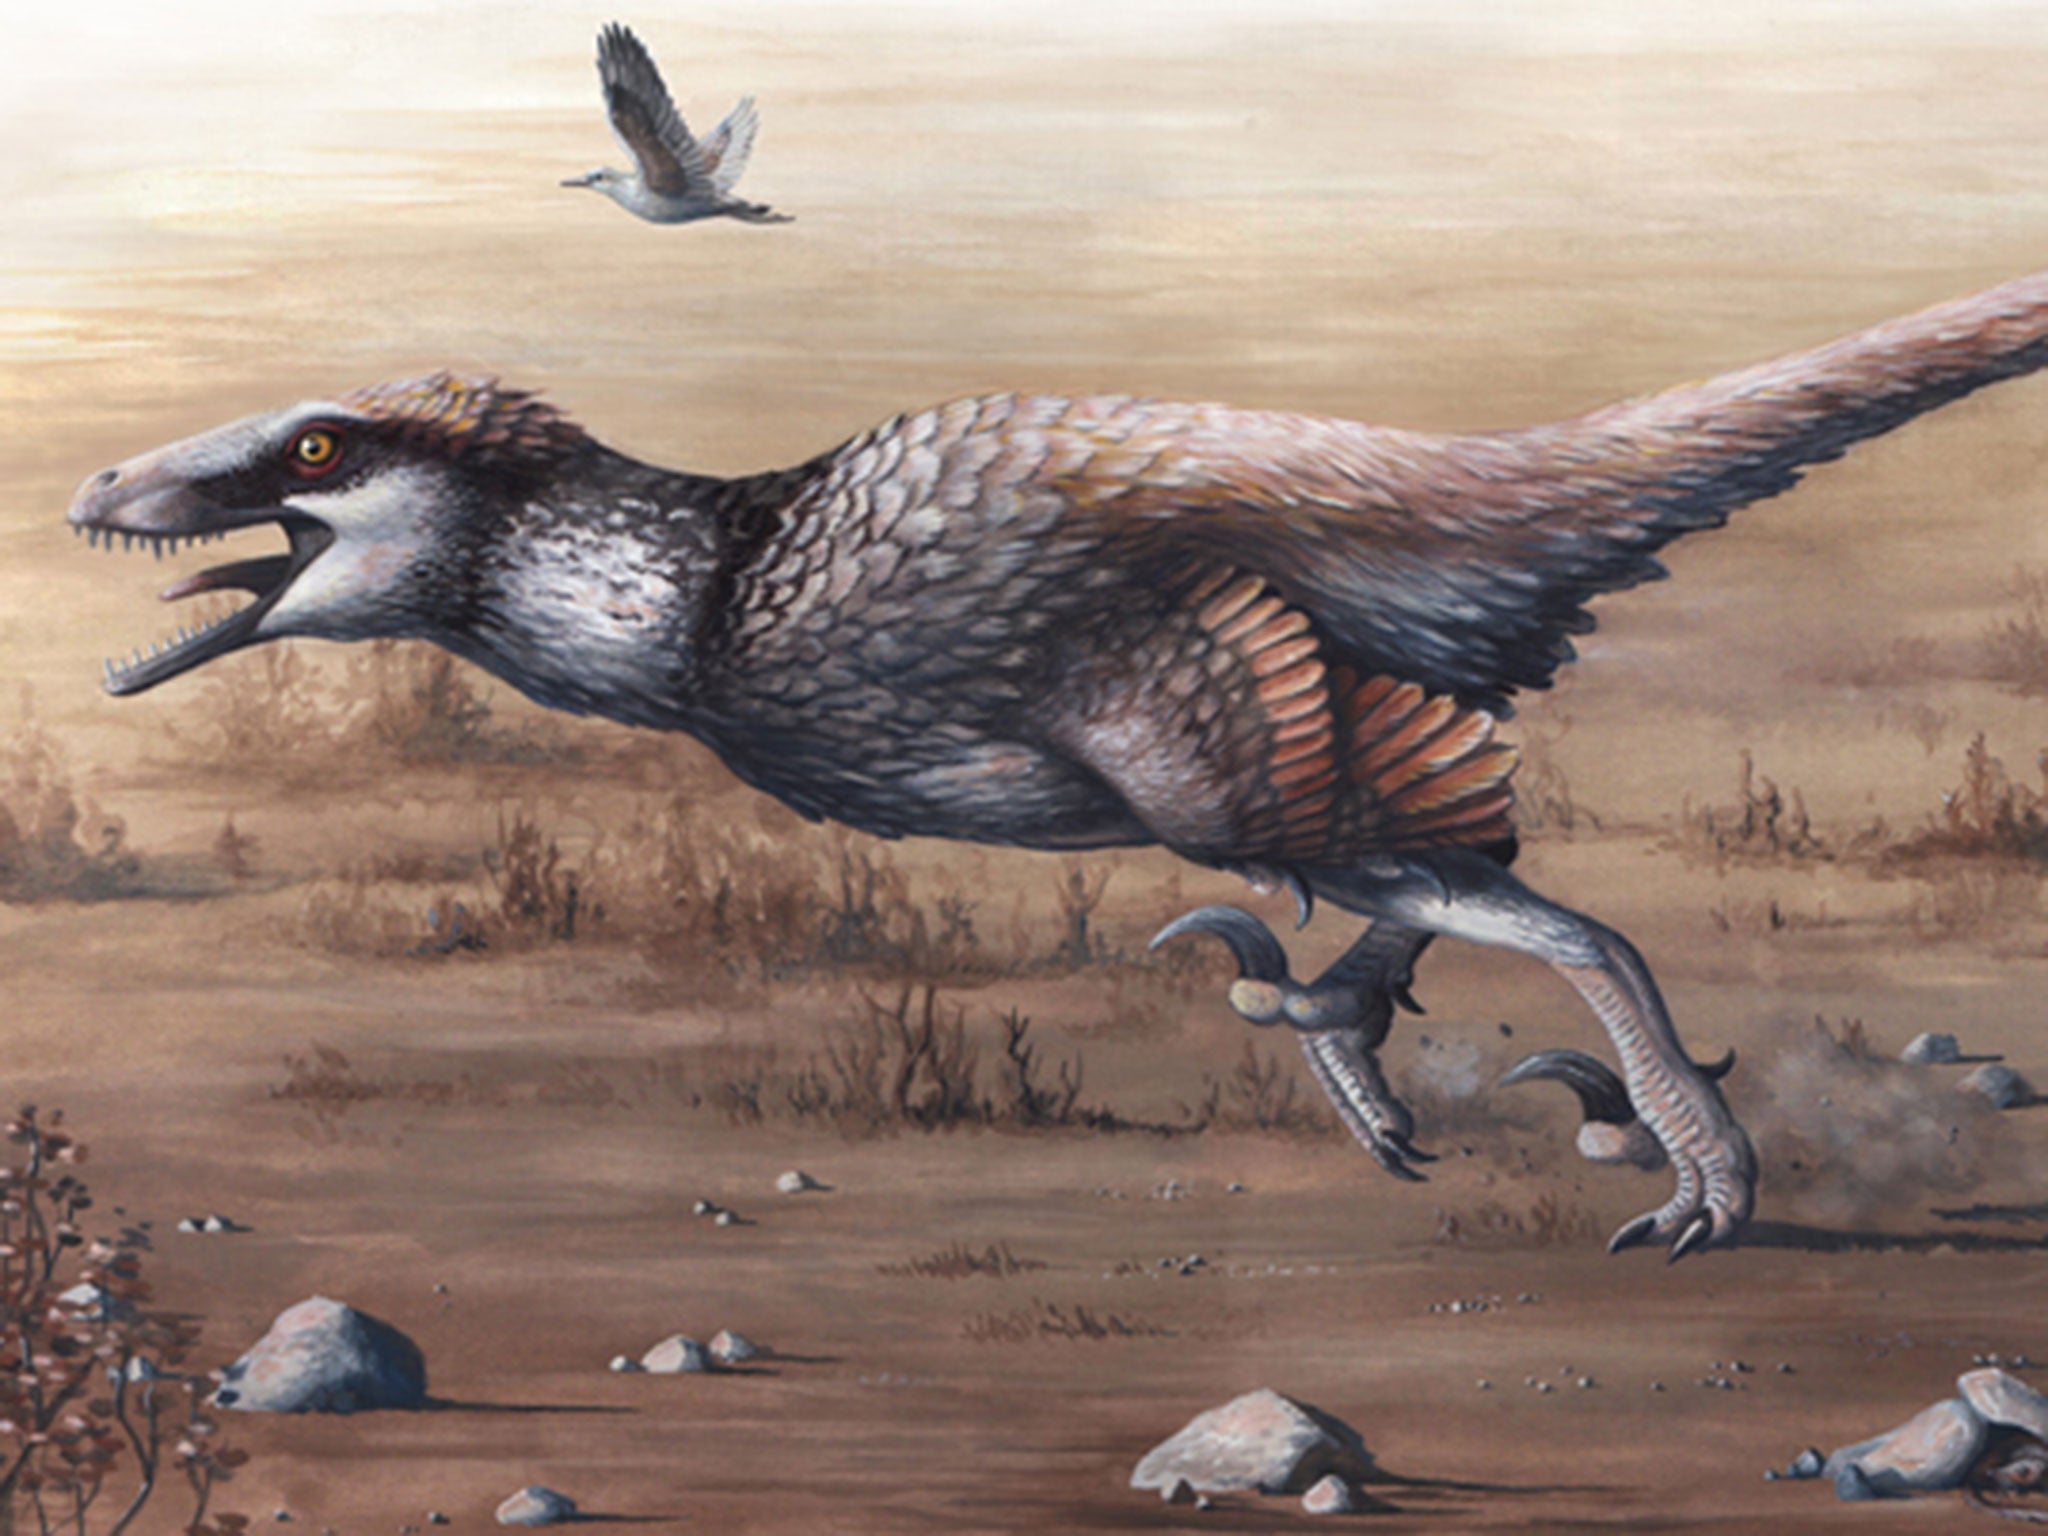 An artist's rendering of the Dakotaraptor